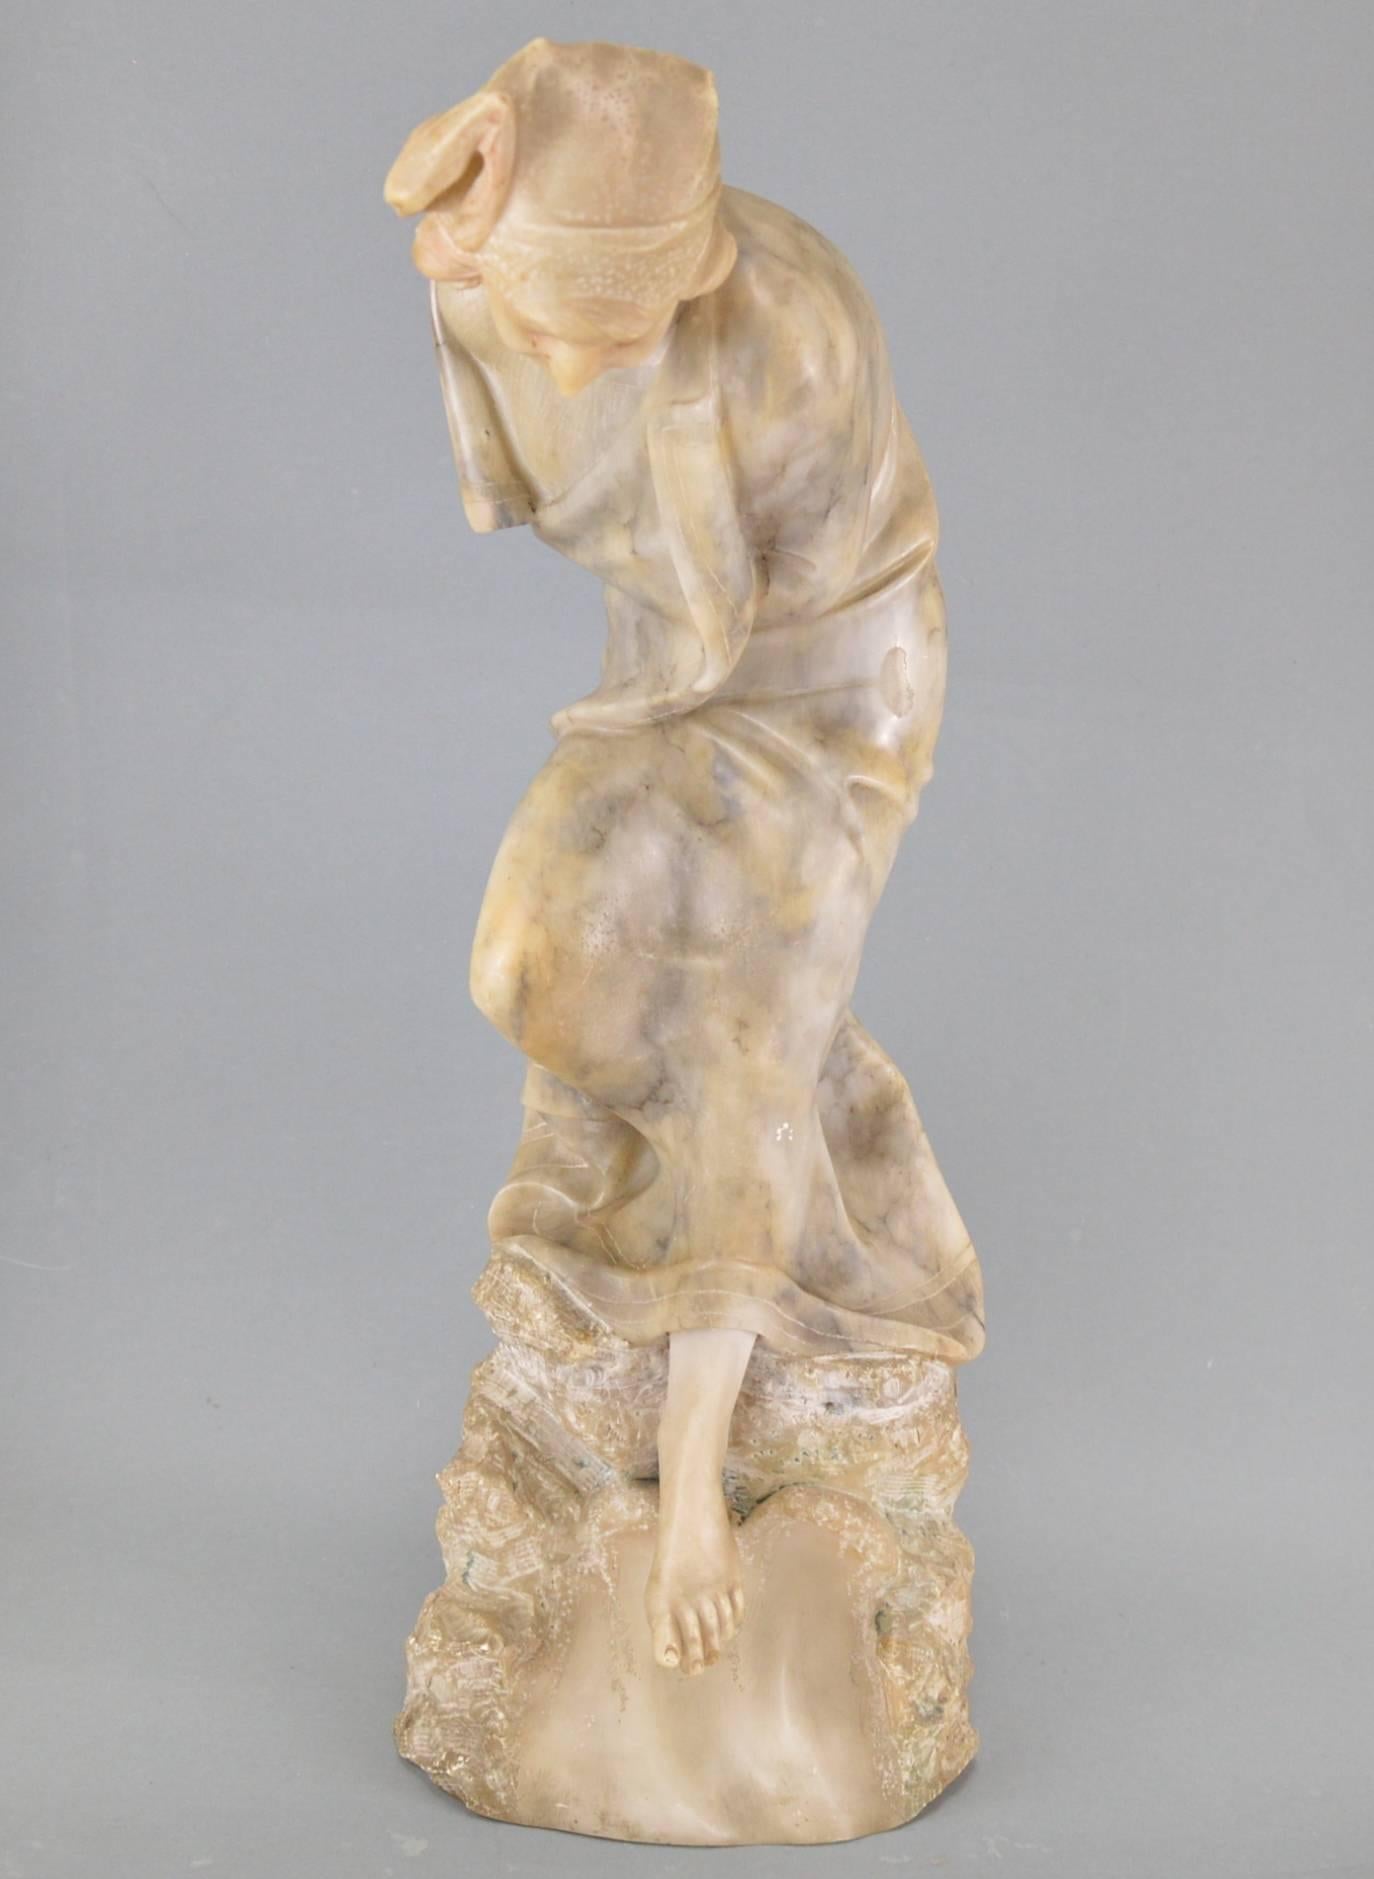 Art Nouveau alabaster sculpture, woman on a rock, late 19th century.
Measures: Height 63 cm.